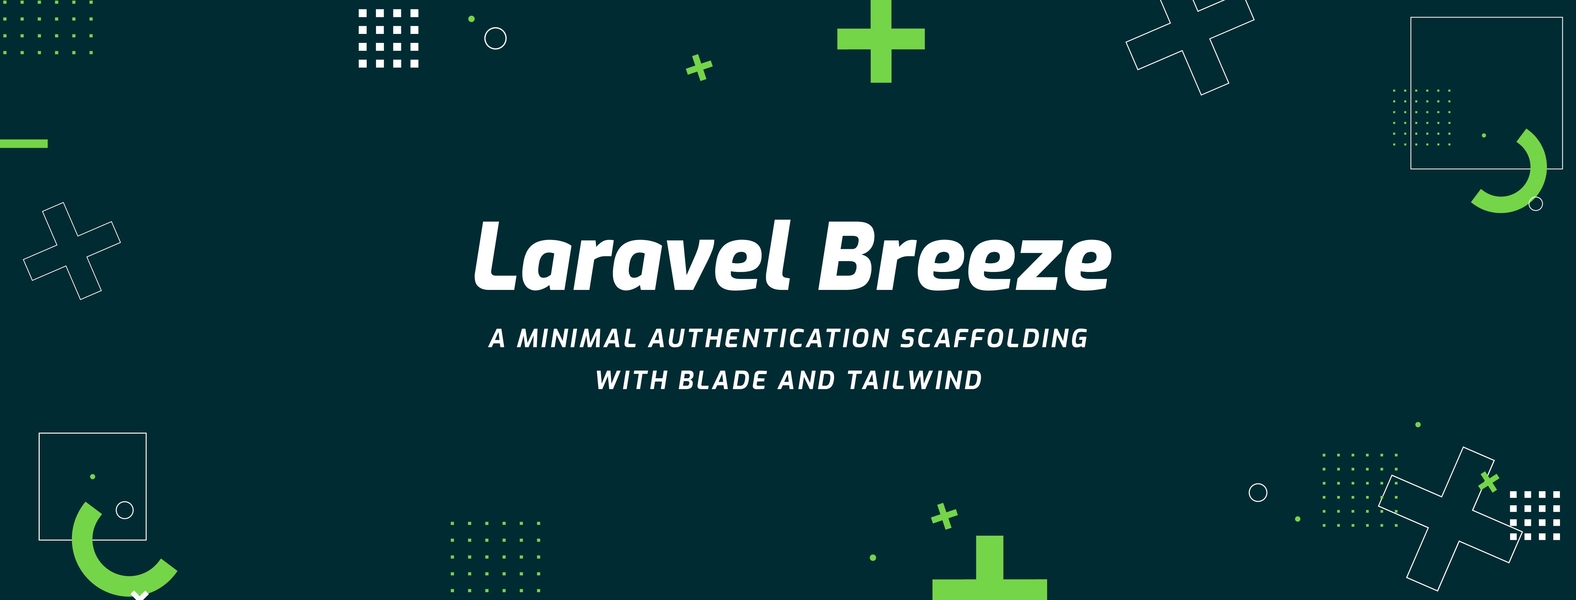 Laravel  Breeze - A Minimal Authentication Scaffolding cover image